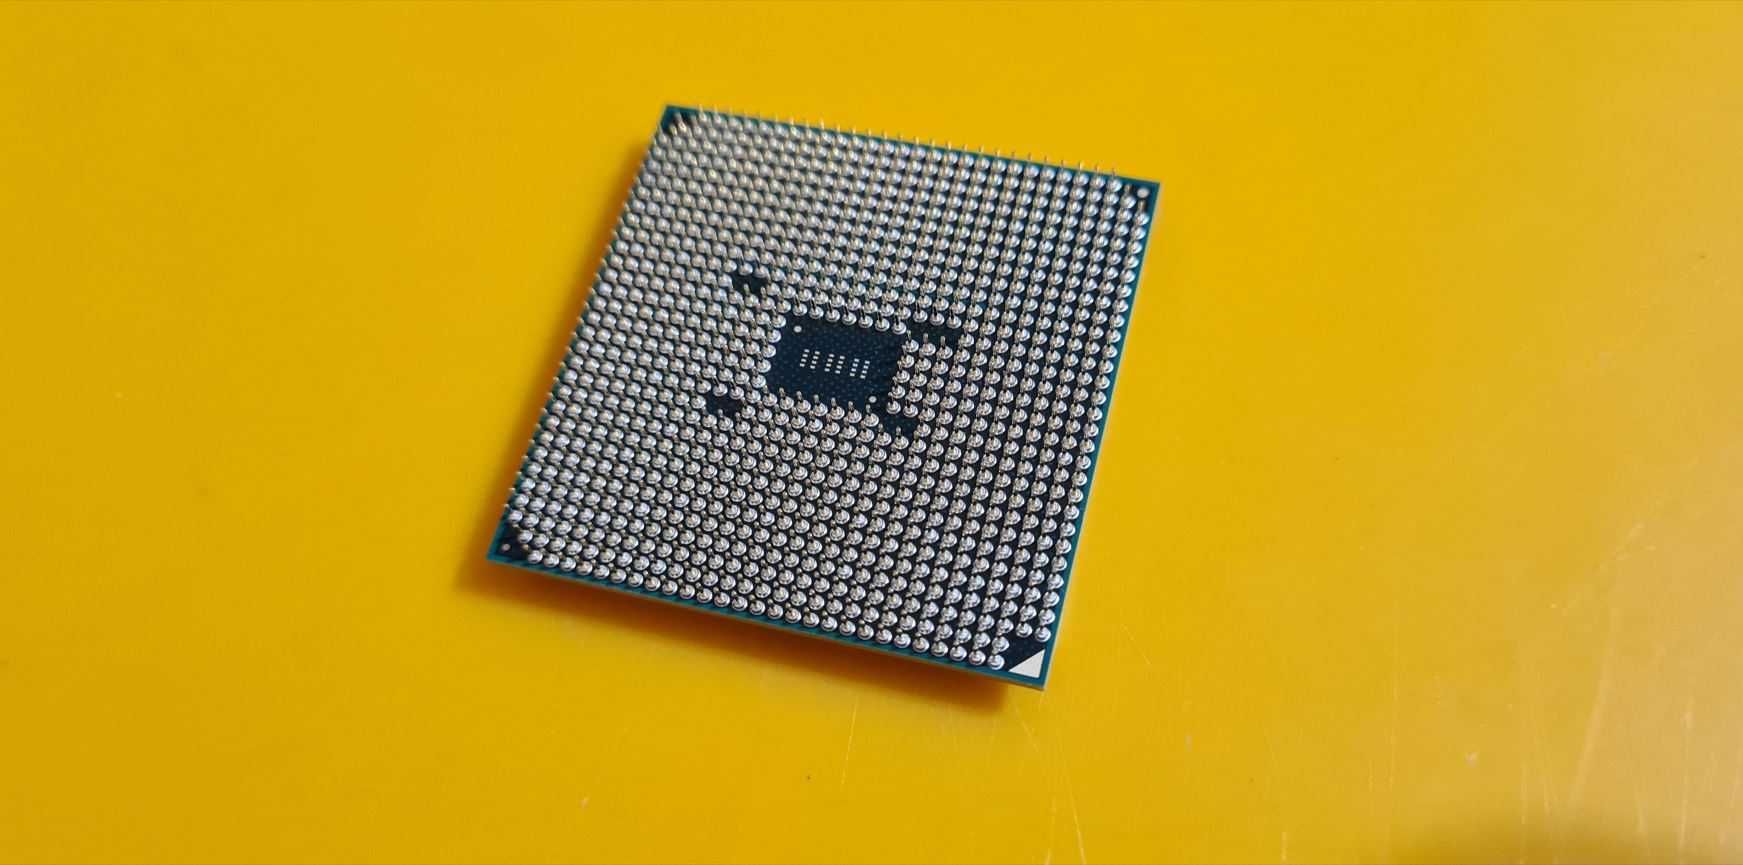 Procesor Quad AMD A10-5700,3,40Ghz Turbo 4,00Ghz,Socket FM2